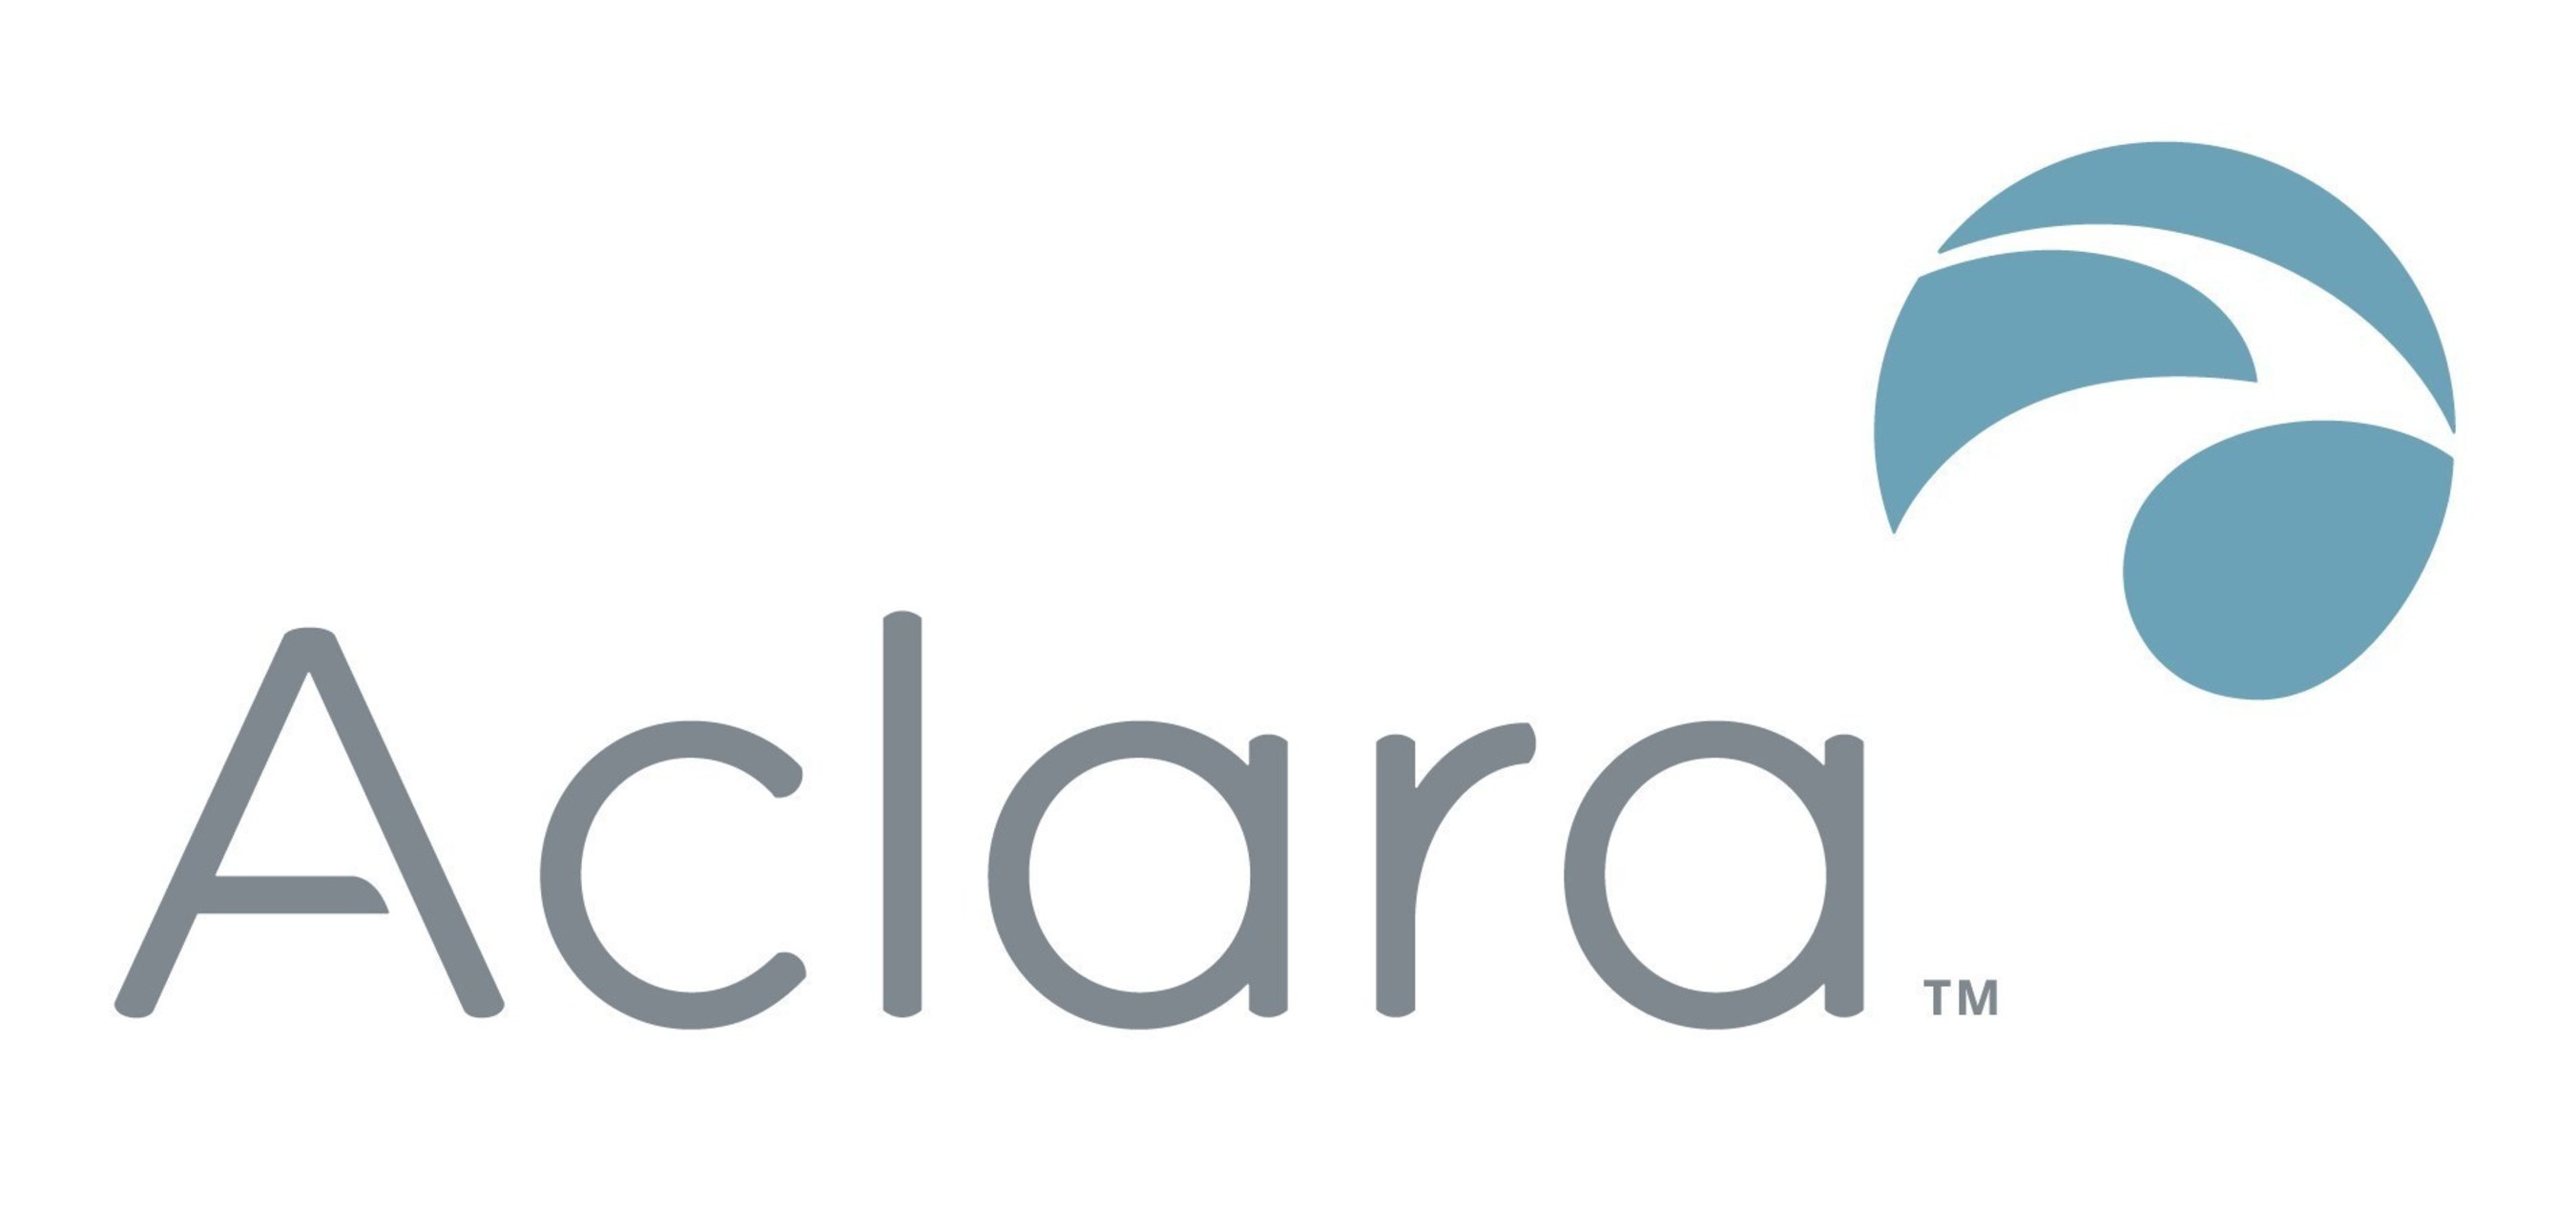 Aclara Logo registered.